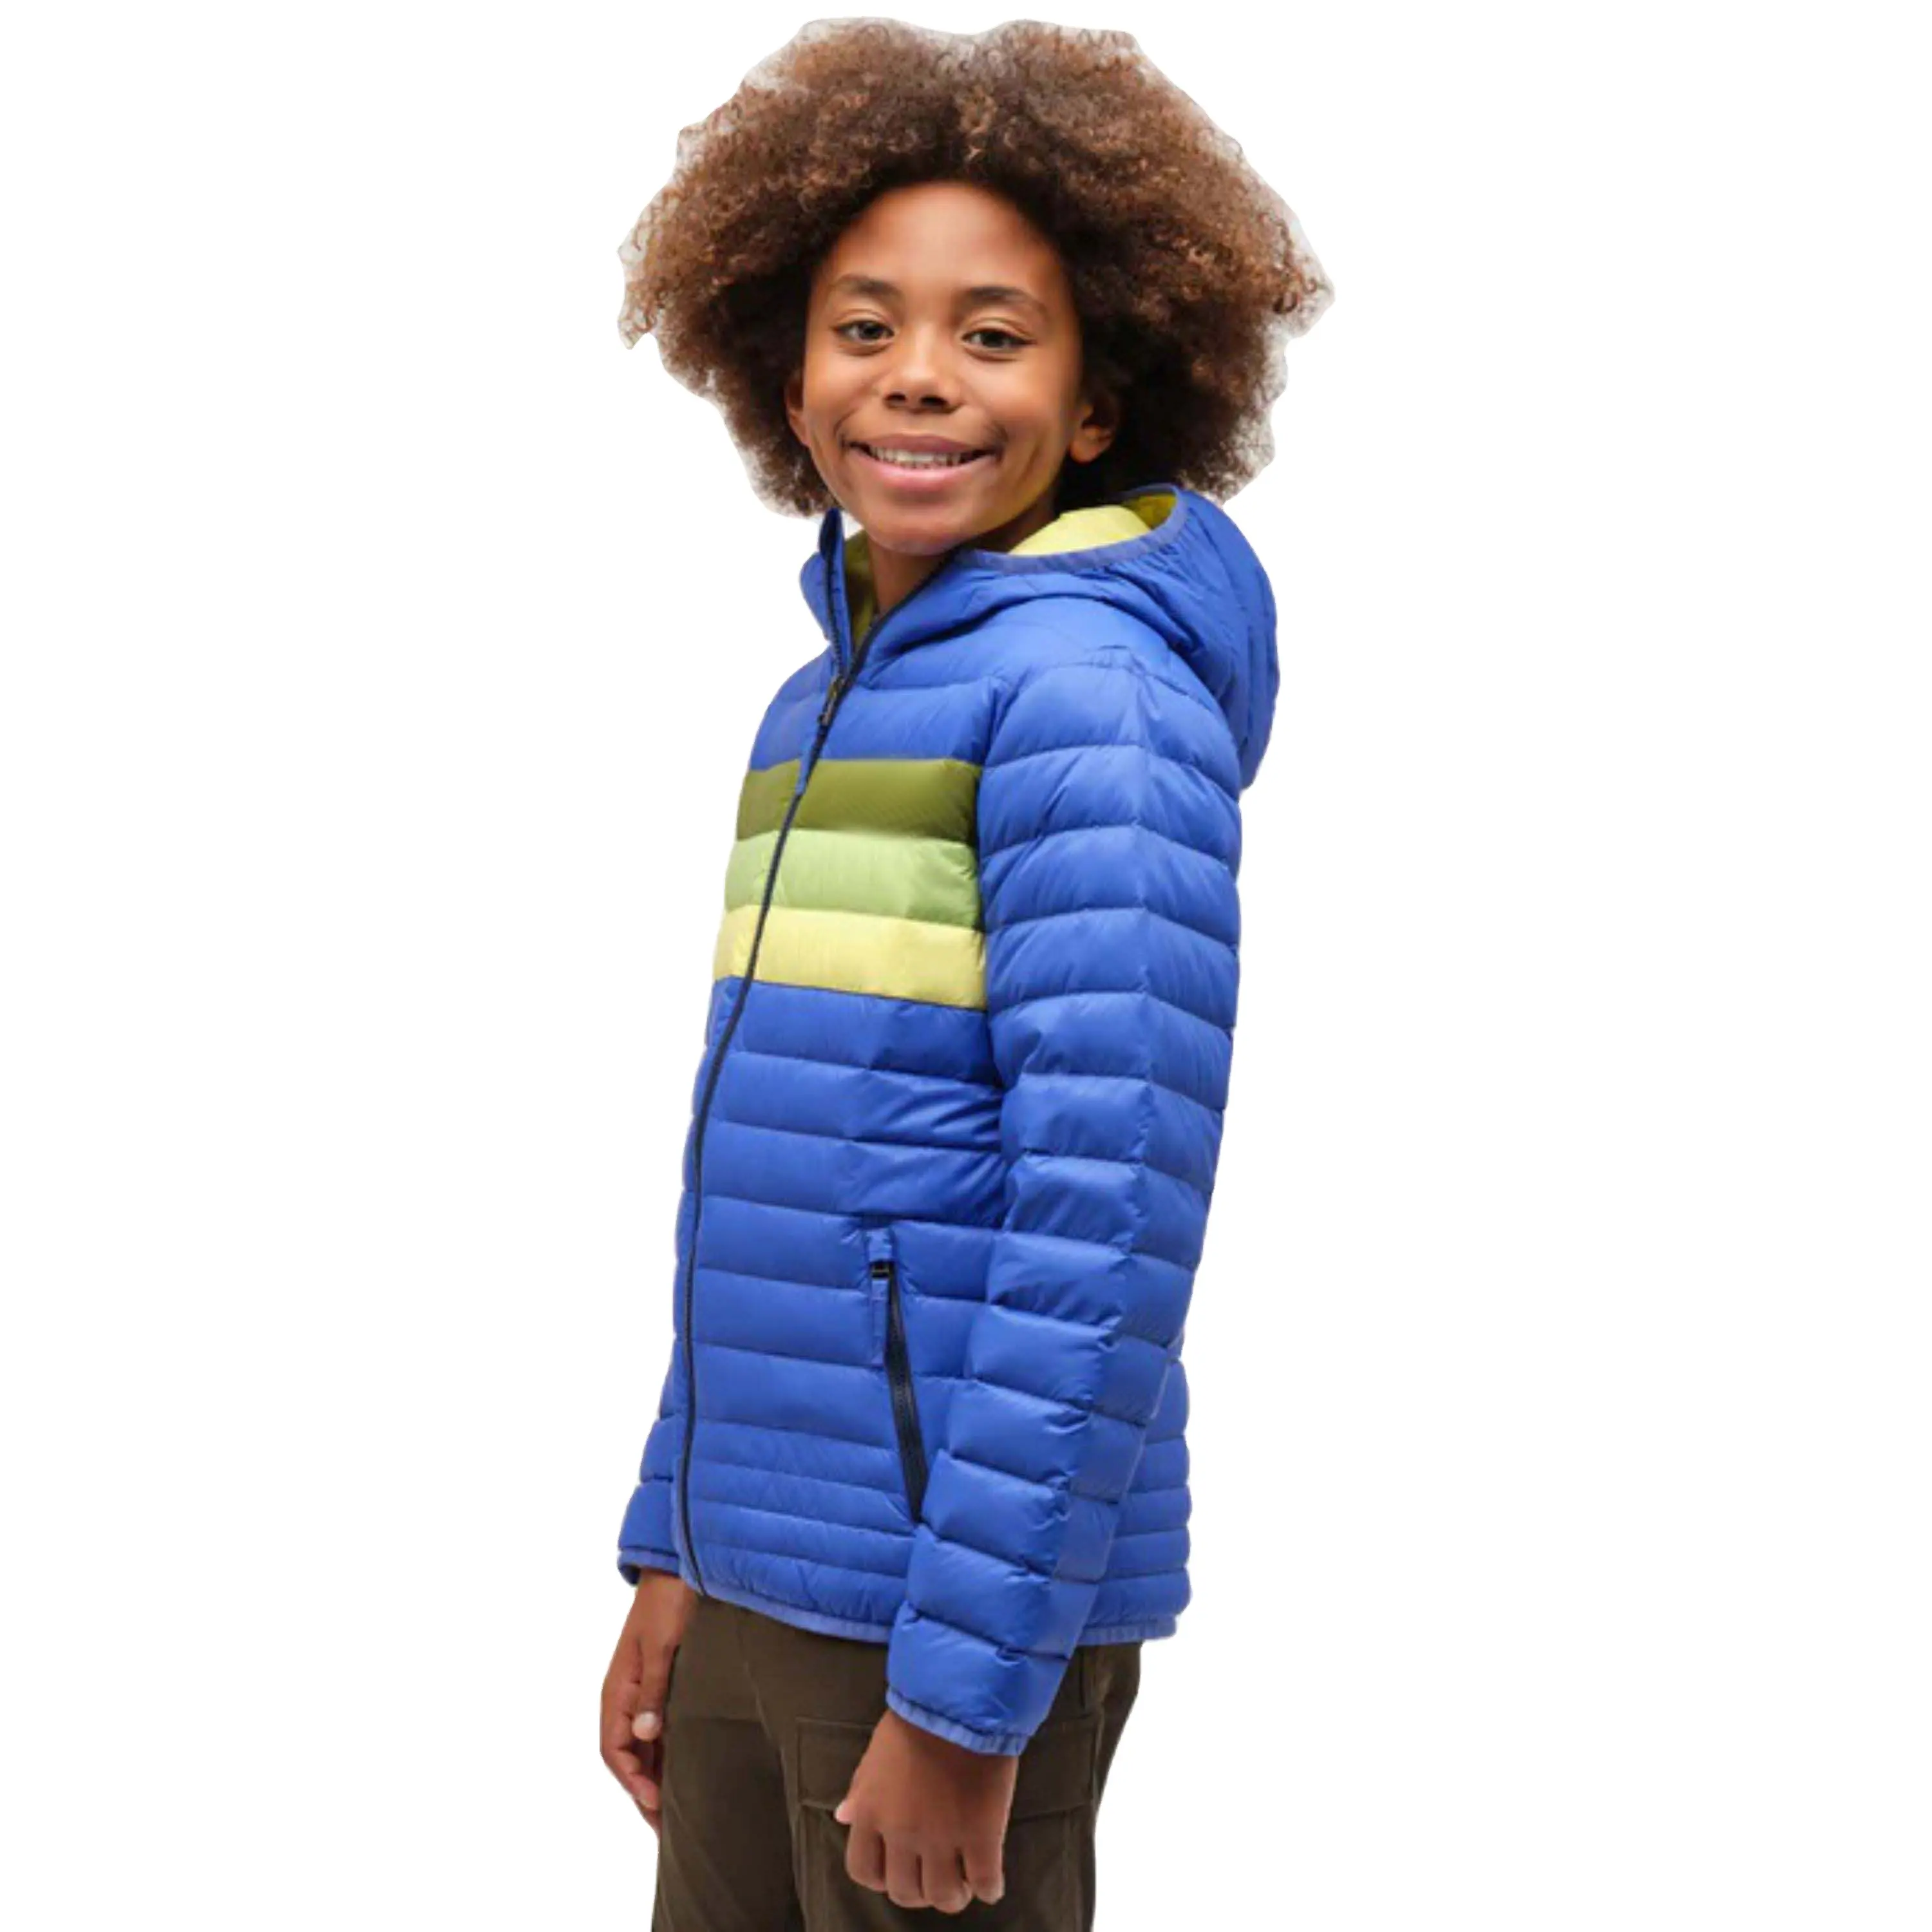 OEM Custom Winter Boys Puffer Jacket - Waterproof, Windproof, Reflective Safety Trim, Blue